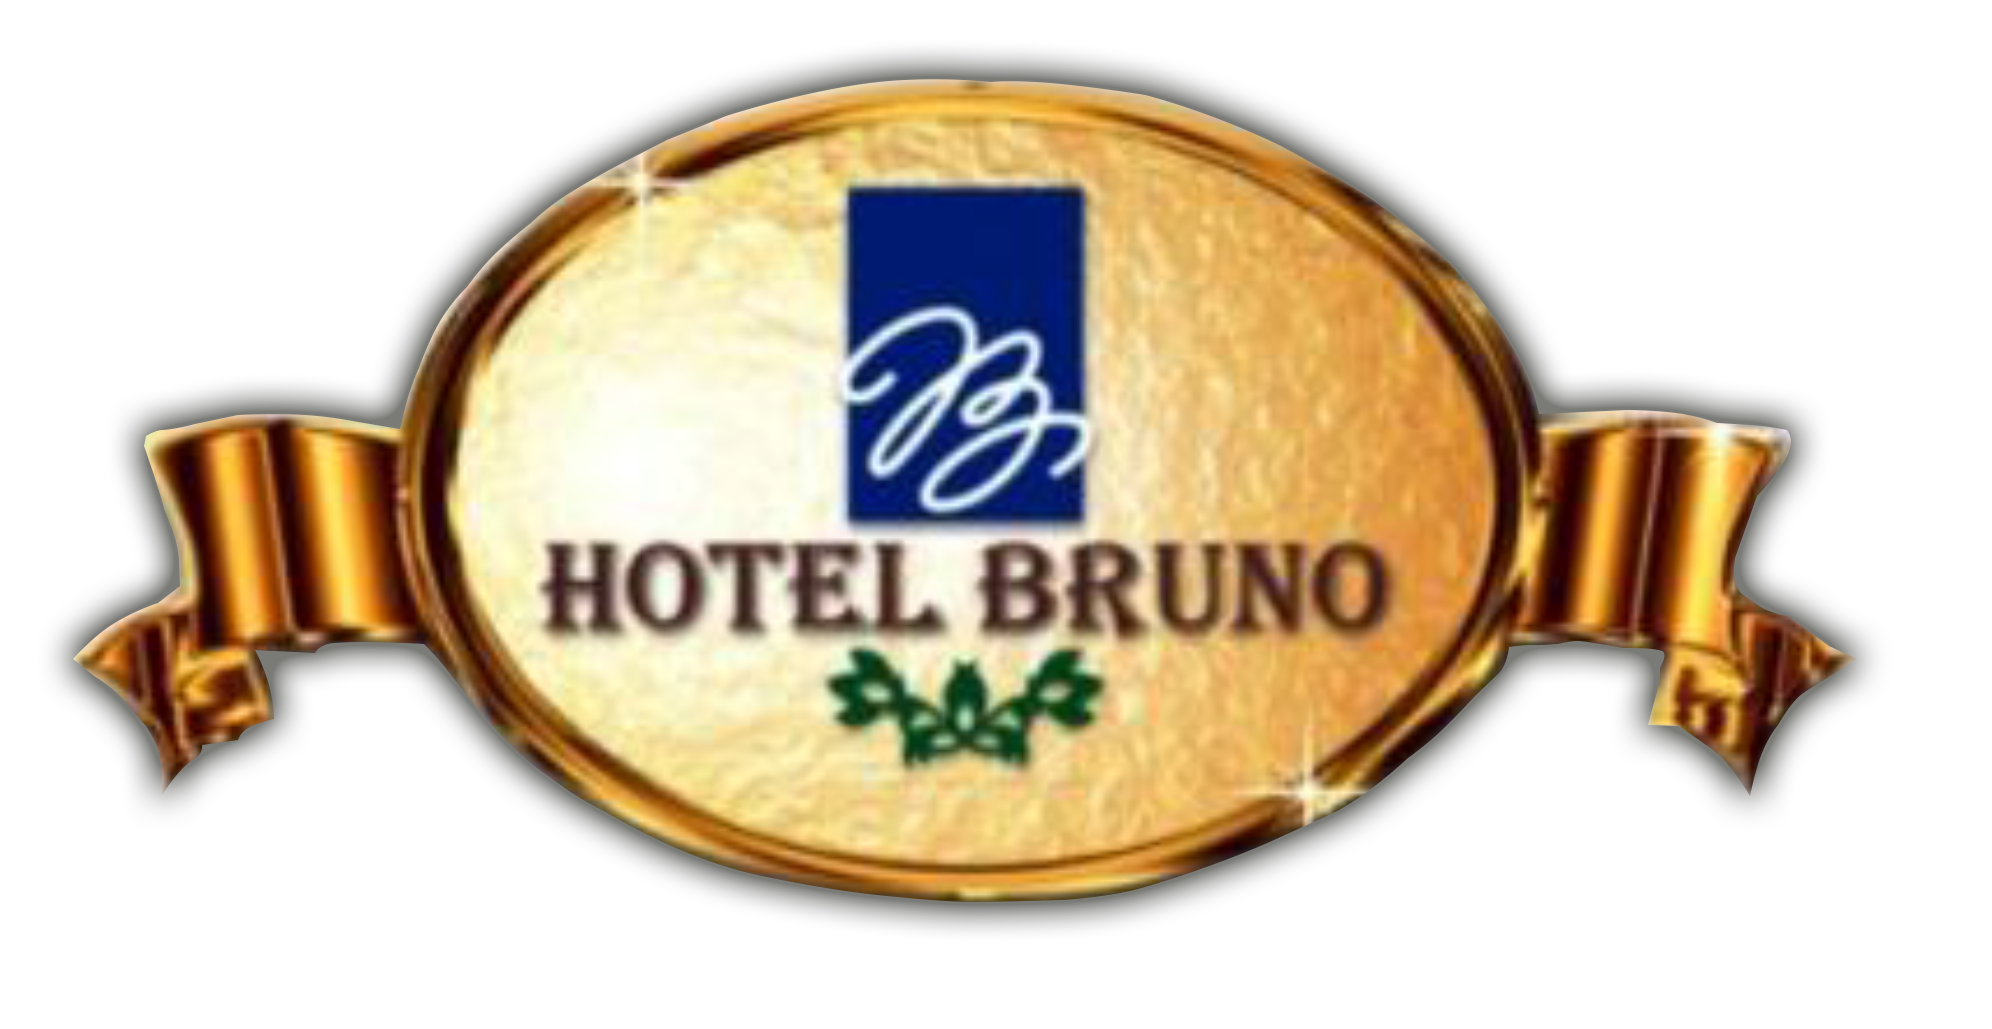 Hotel Bruno